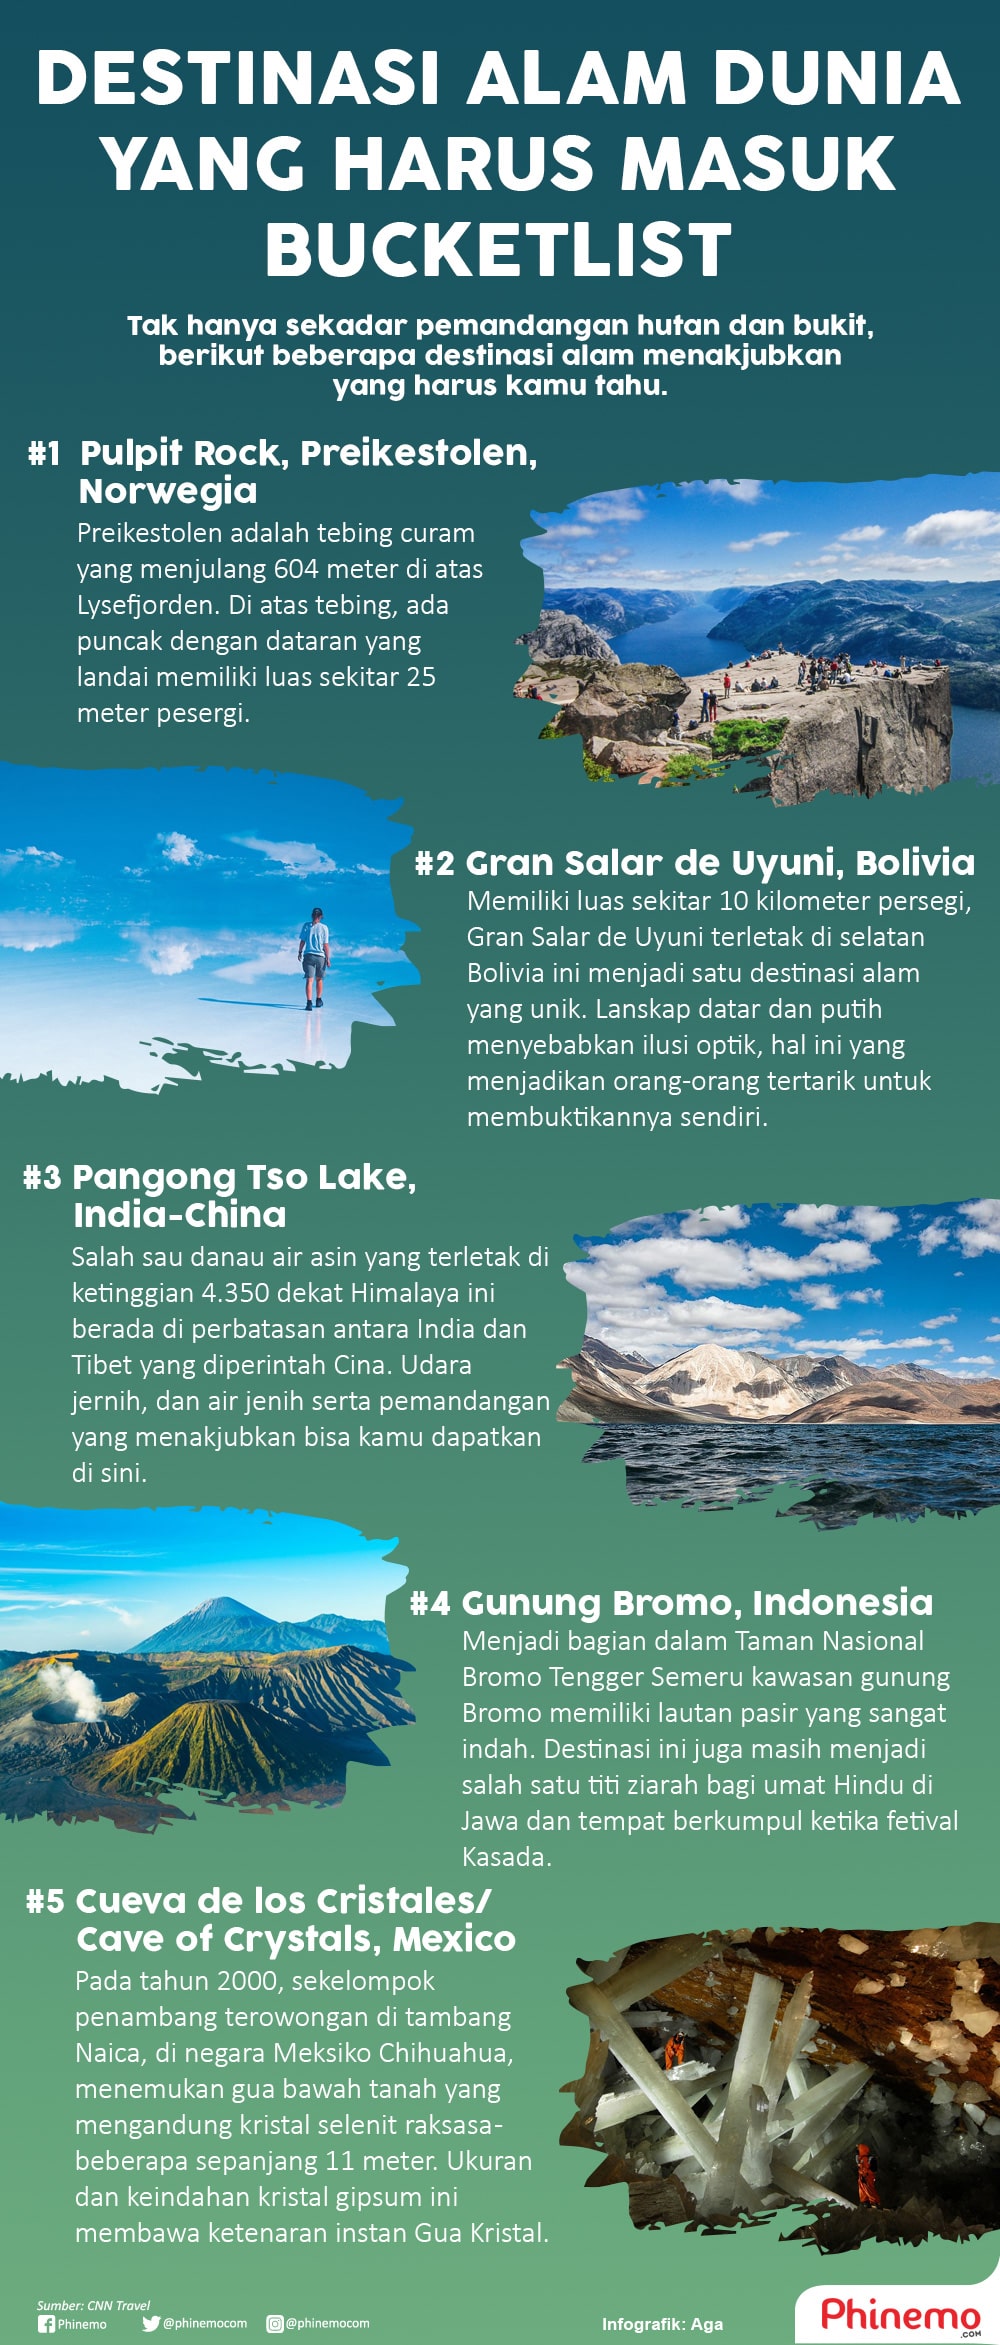 Infografik Mengesankan, Destinasi Alam Dunia Berikut Ini Harus Masuk ke Bucketlist-mu.